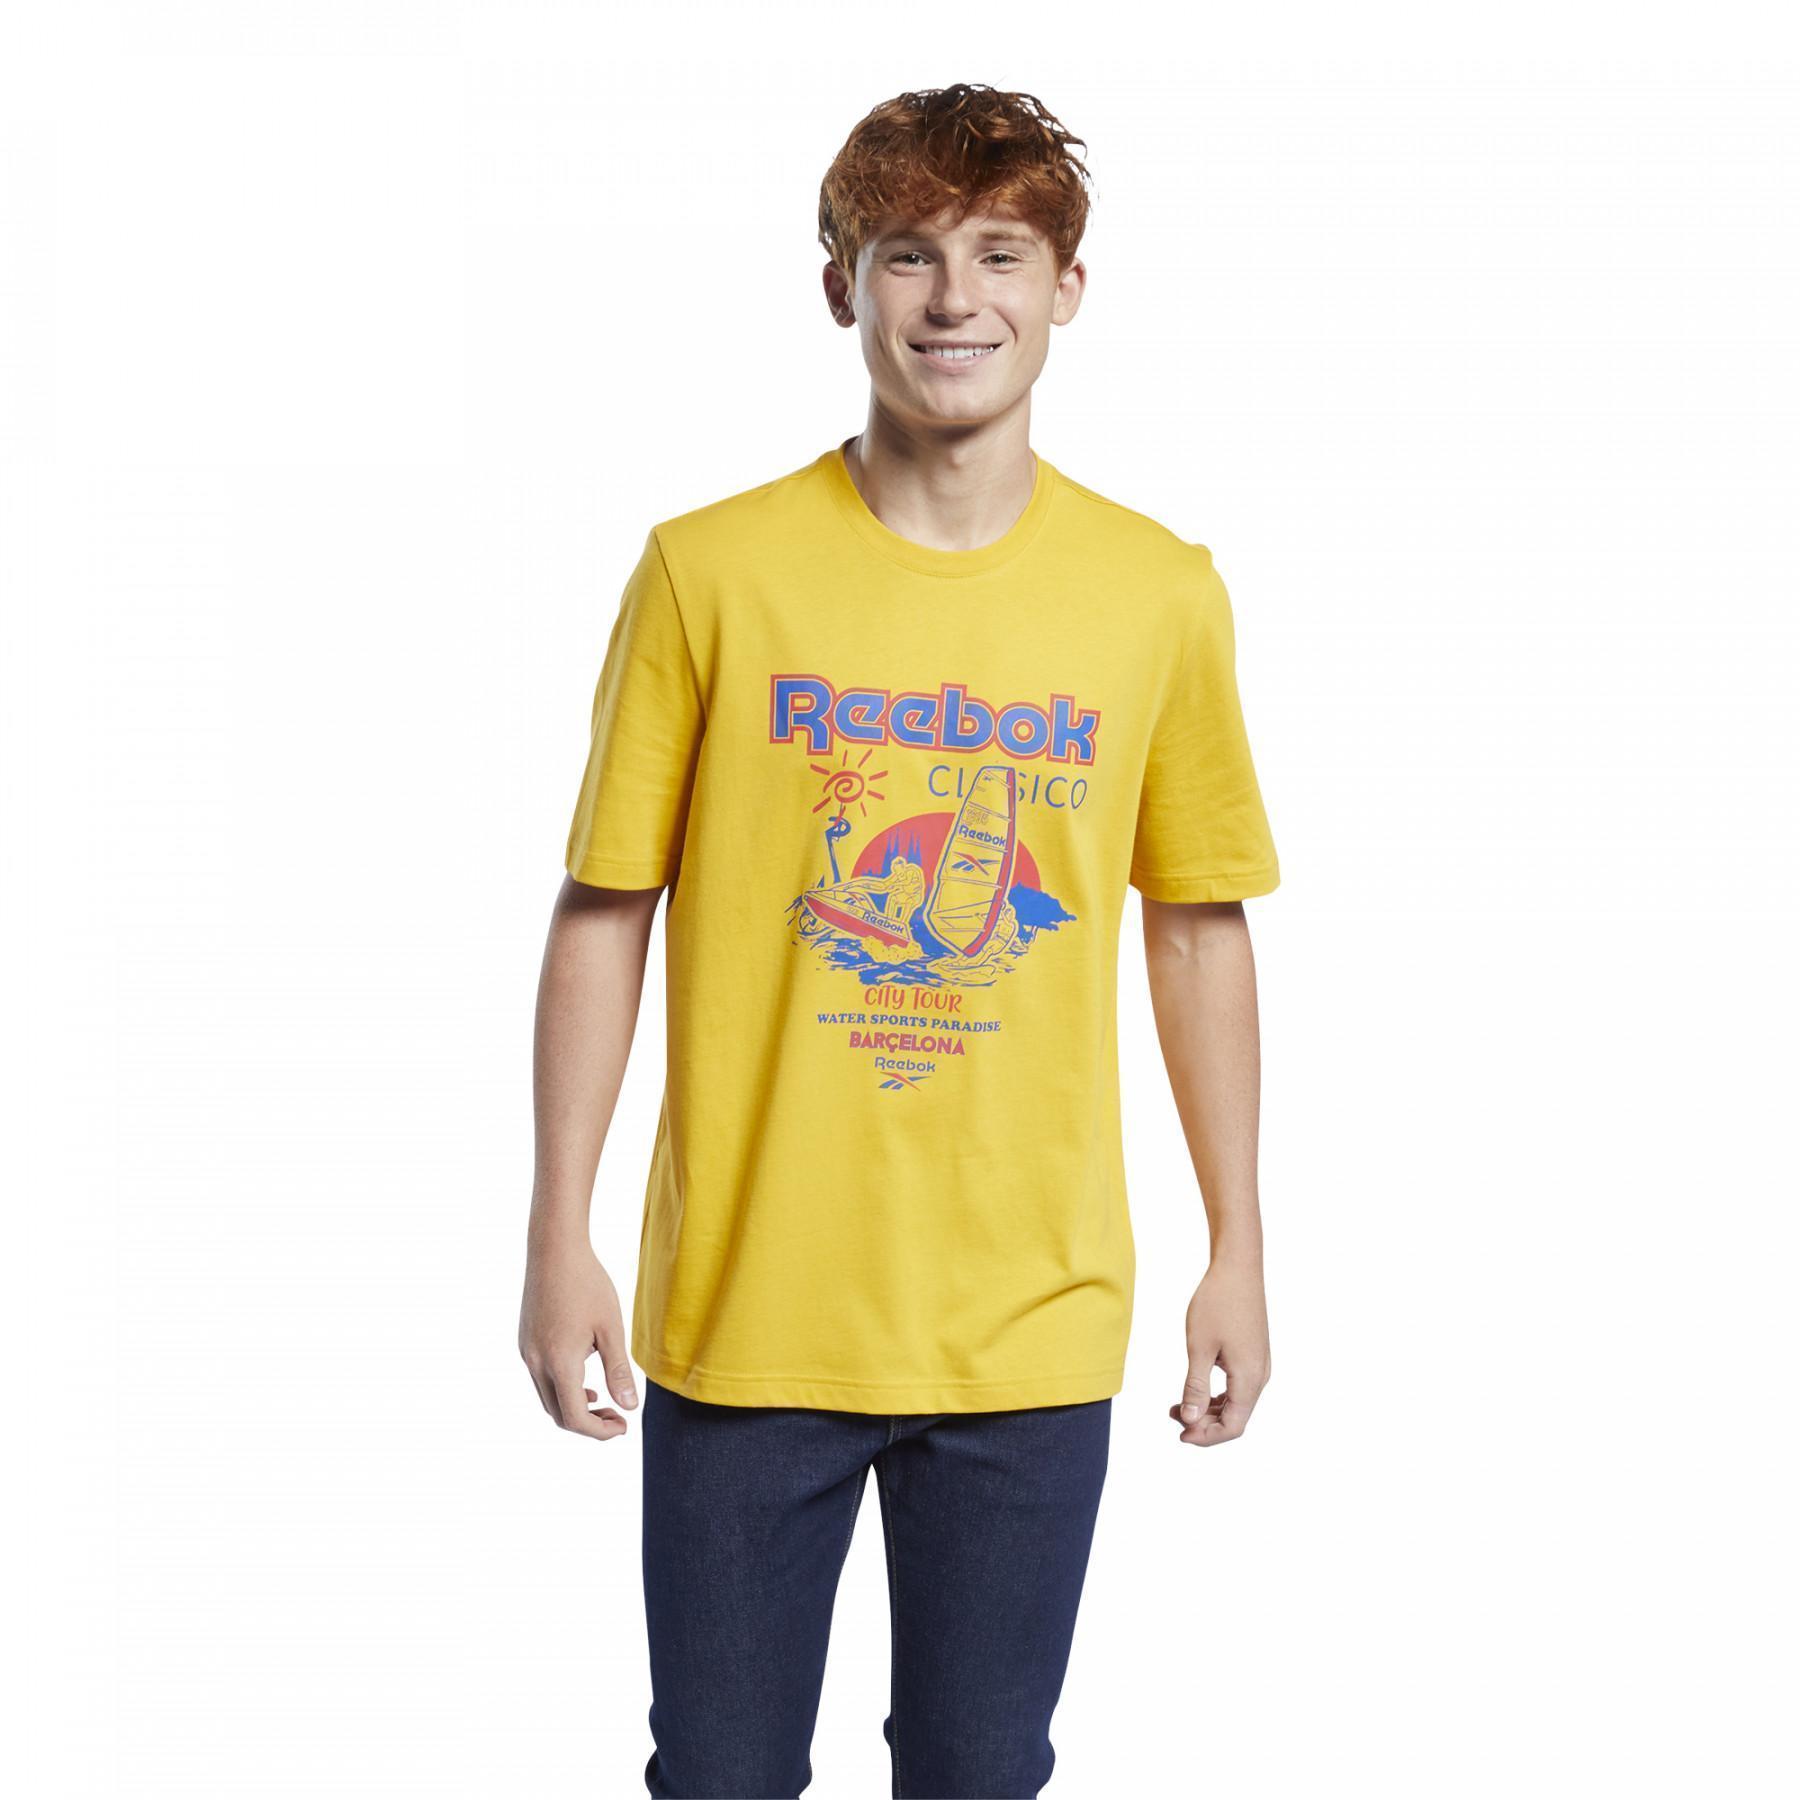 T-shirt Reebok Classics